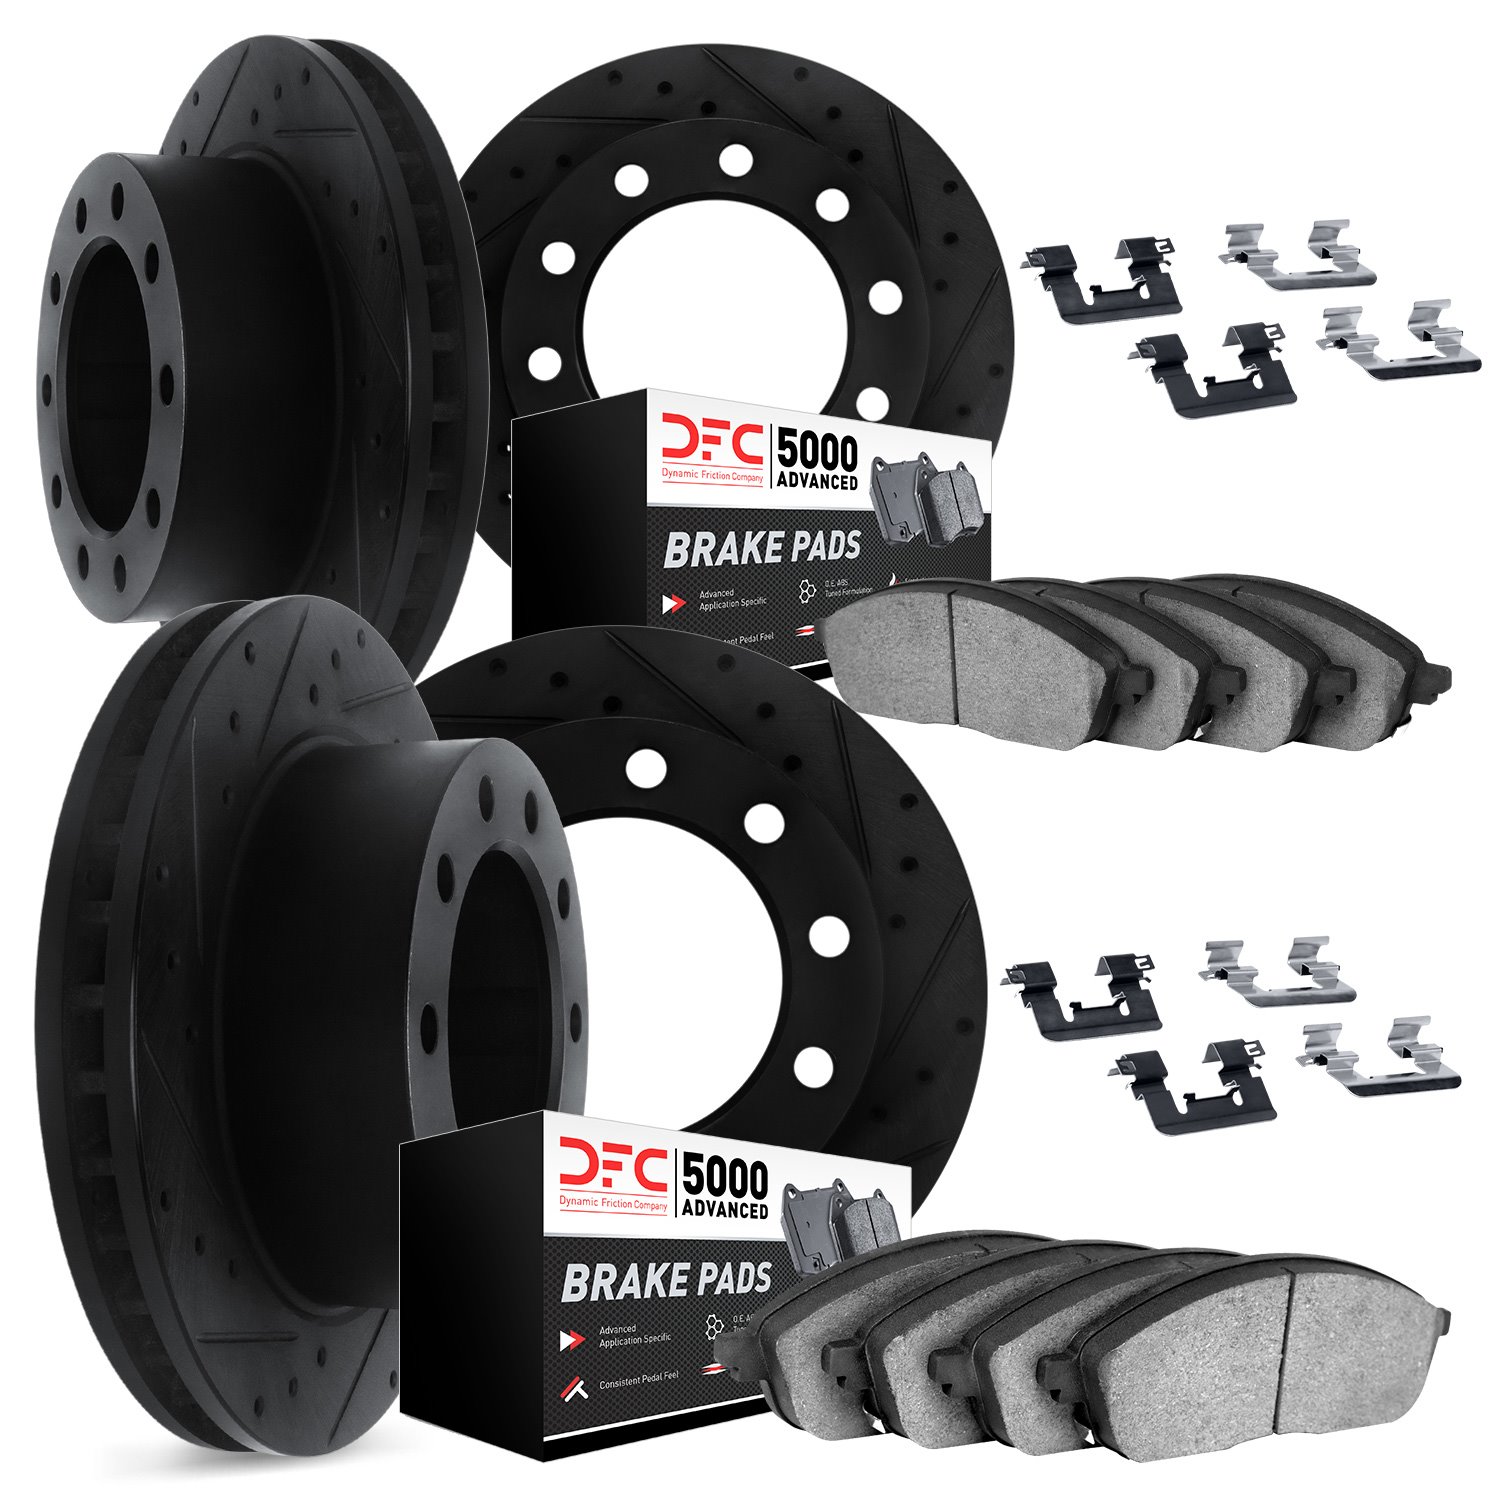 8514-54400 Drilled/Slotted Brake Rotors w/5000 Advanced Brake Pads Kit & Hardware [Black], 2008-2021 Multiple Makes/Models, Posi